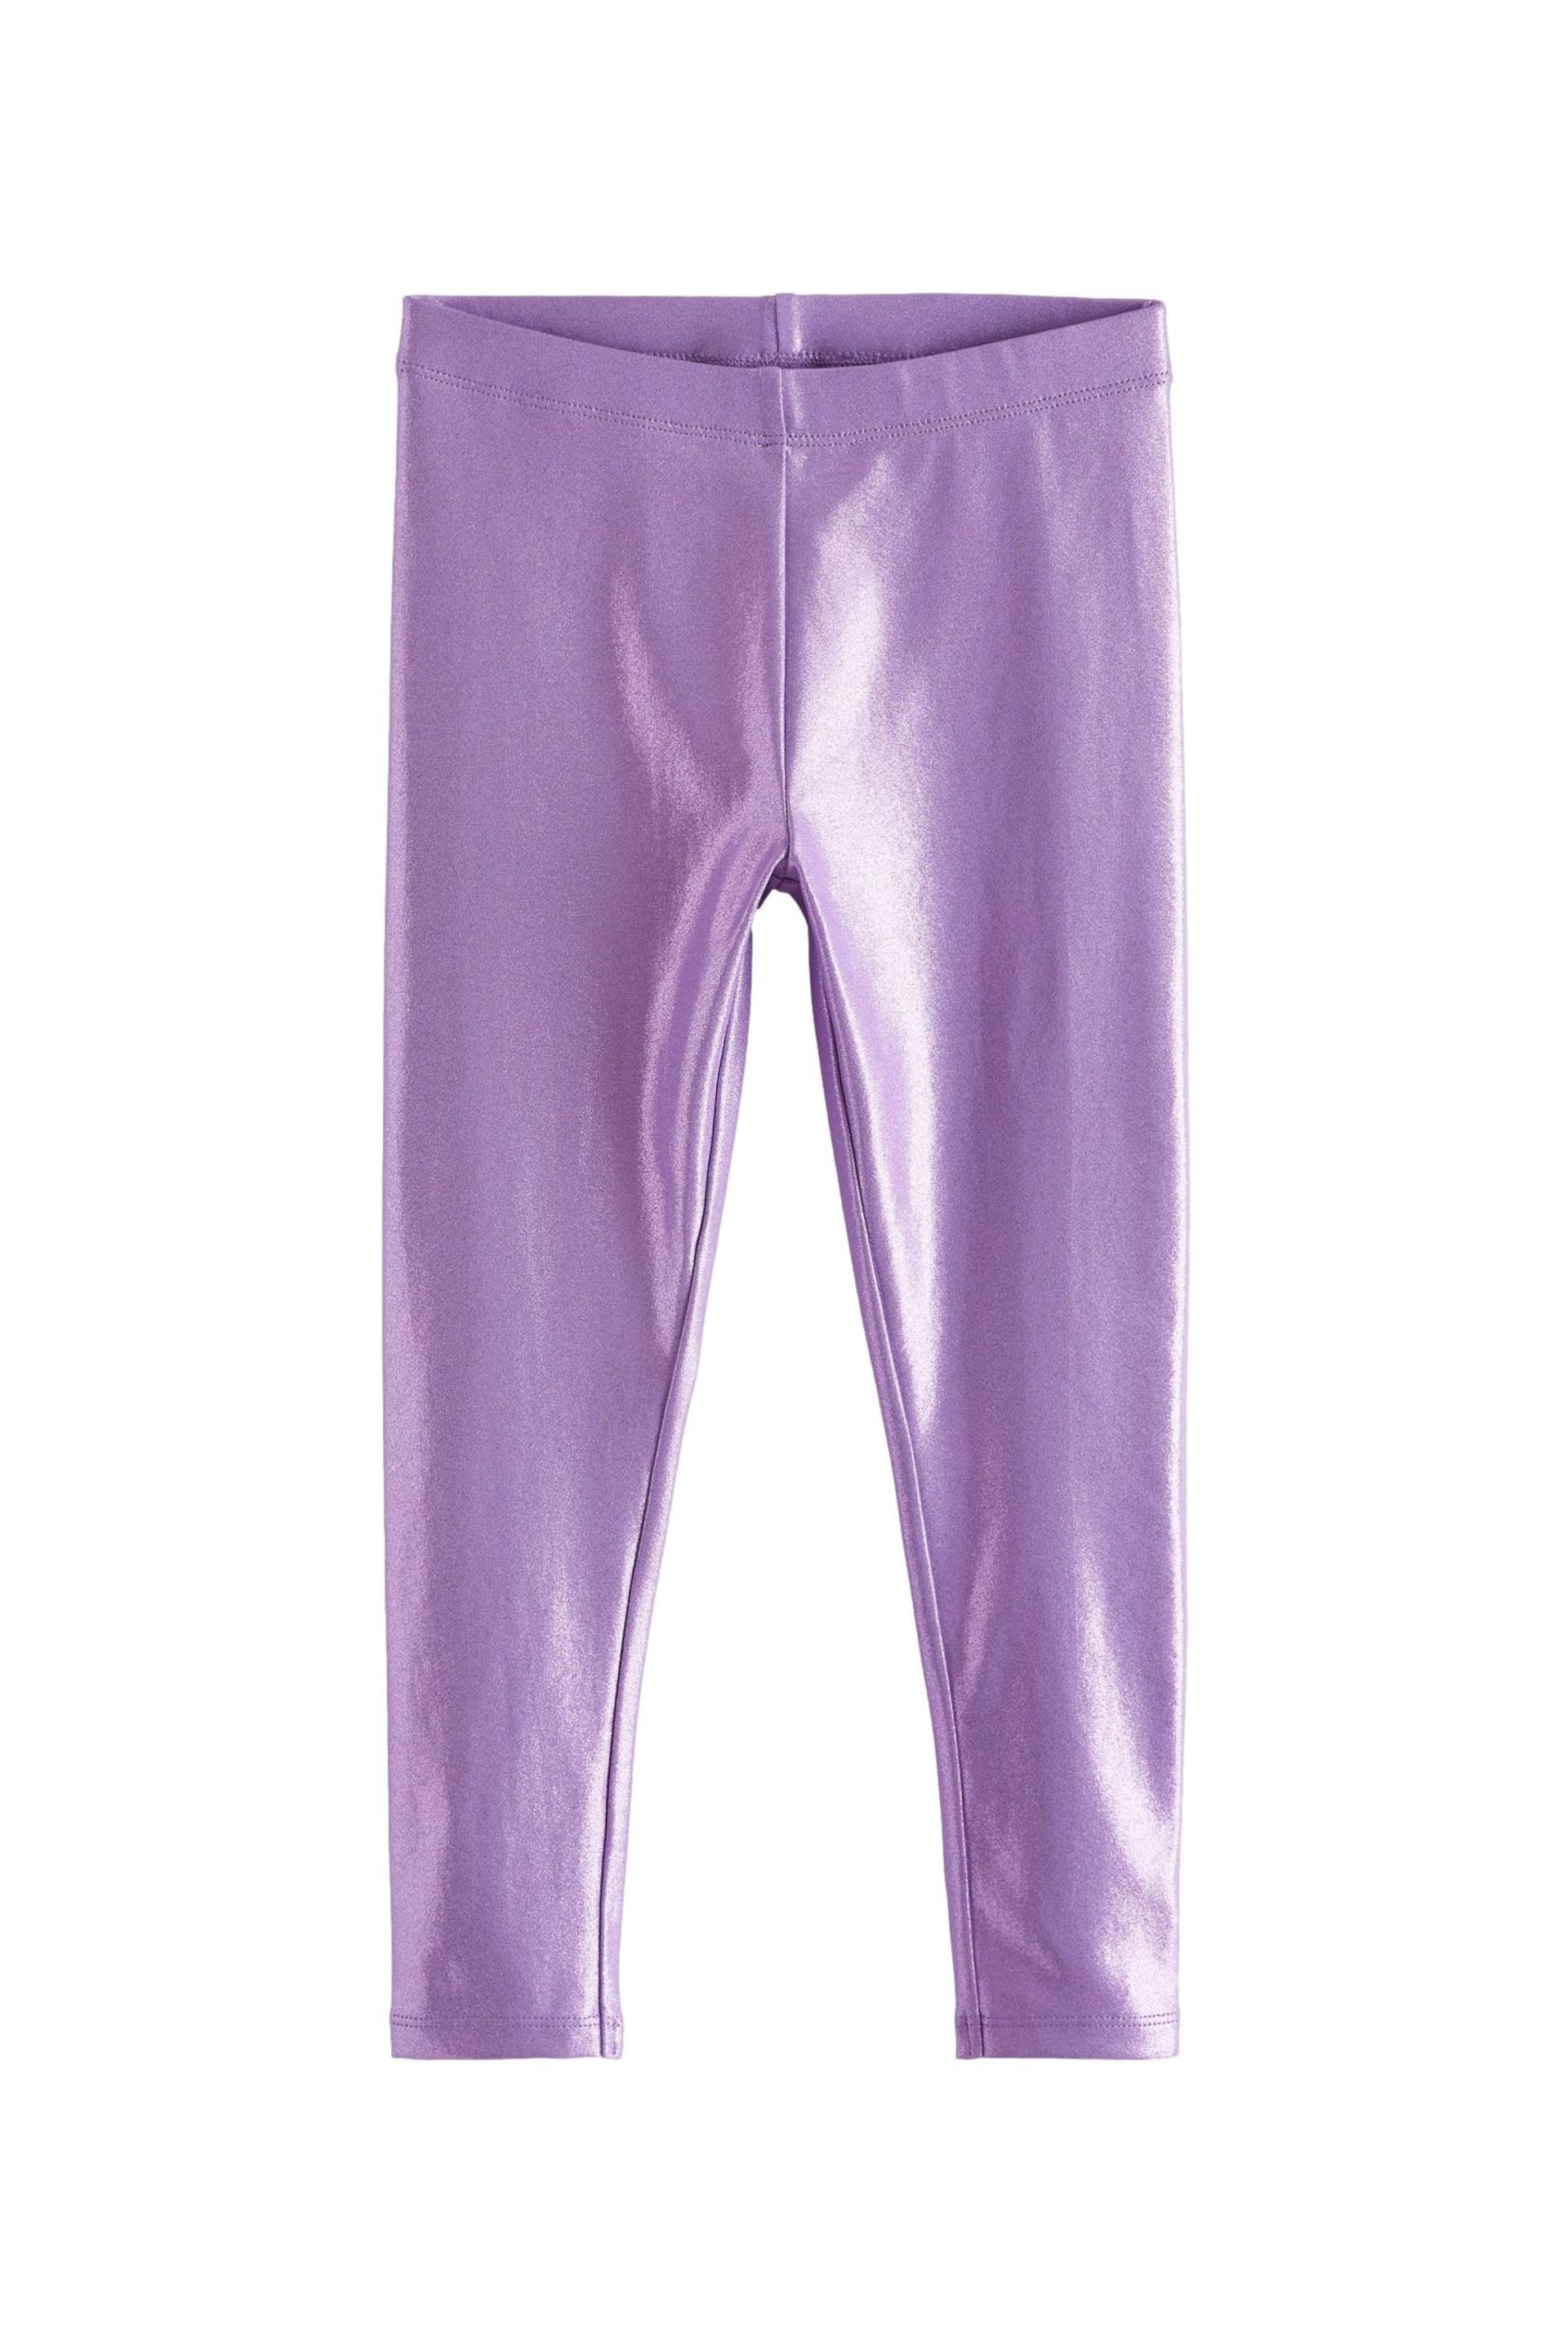 Lilac Purple Metallic Foil Shiny Leggings (3-16yrs) - Image 5 of 7